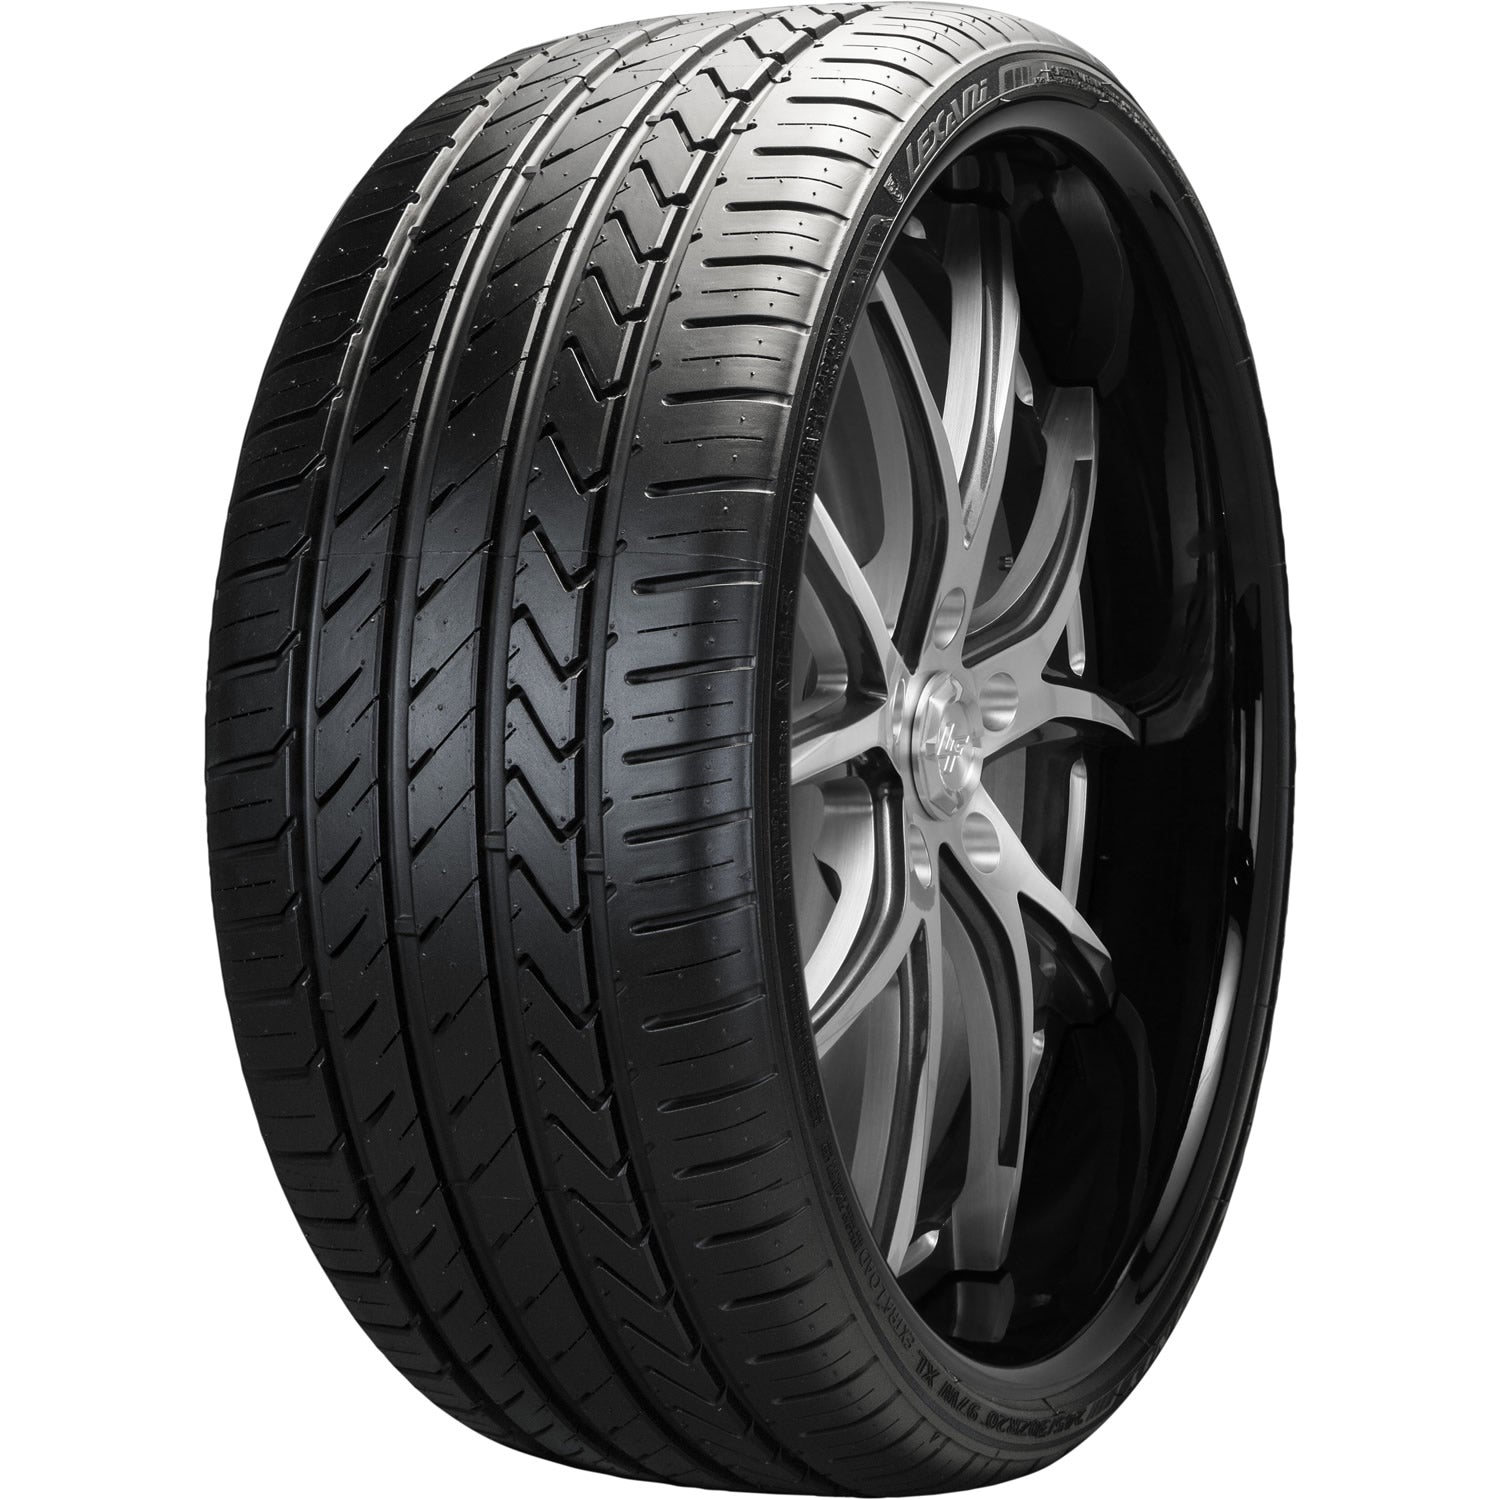 LEXANI LX-TWENTY 275/40ZR22 (30.7X10.9R 22) Tires